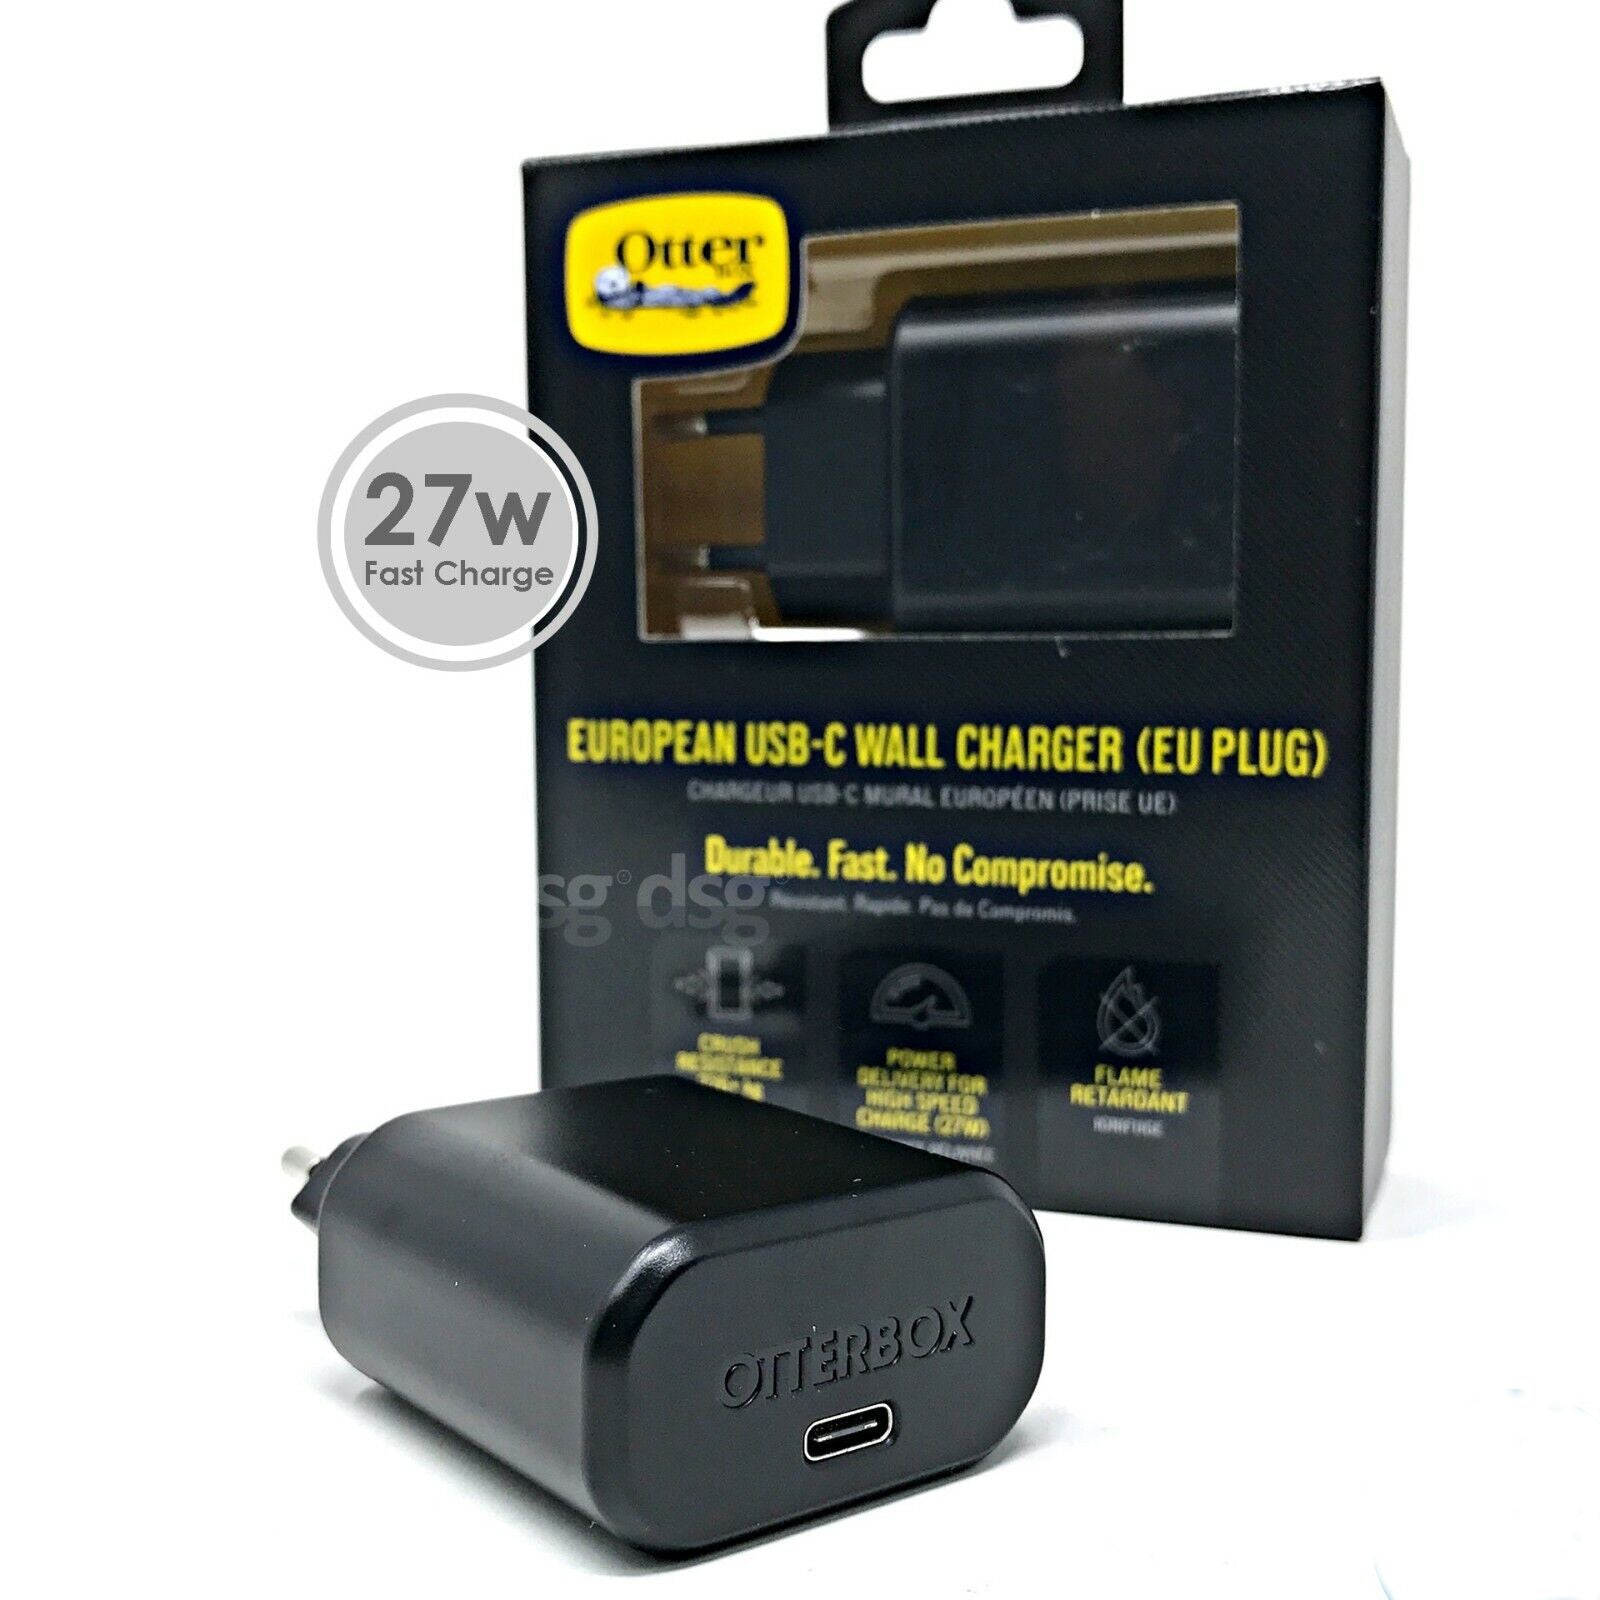 OtterBox European USB-C Wall charger (EU Plug)